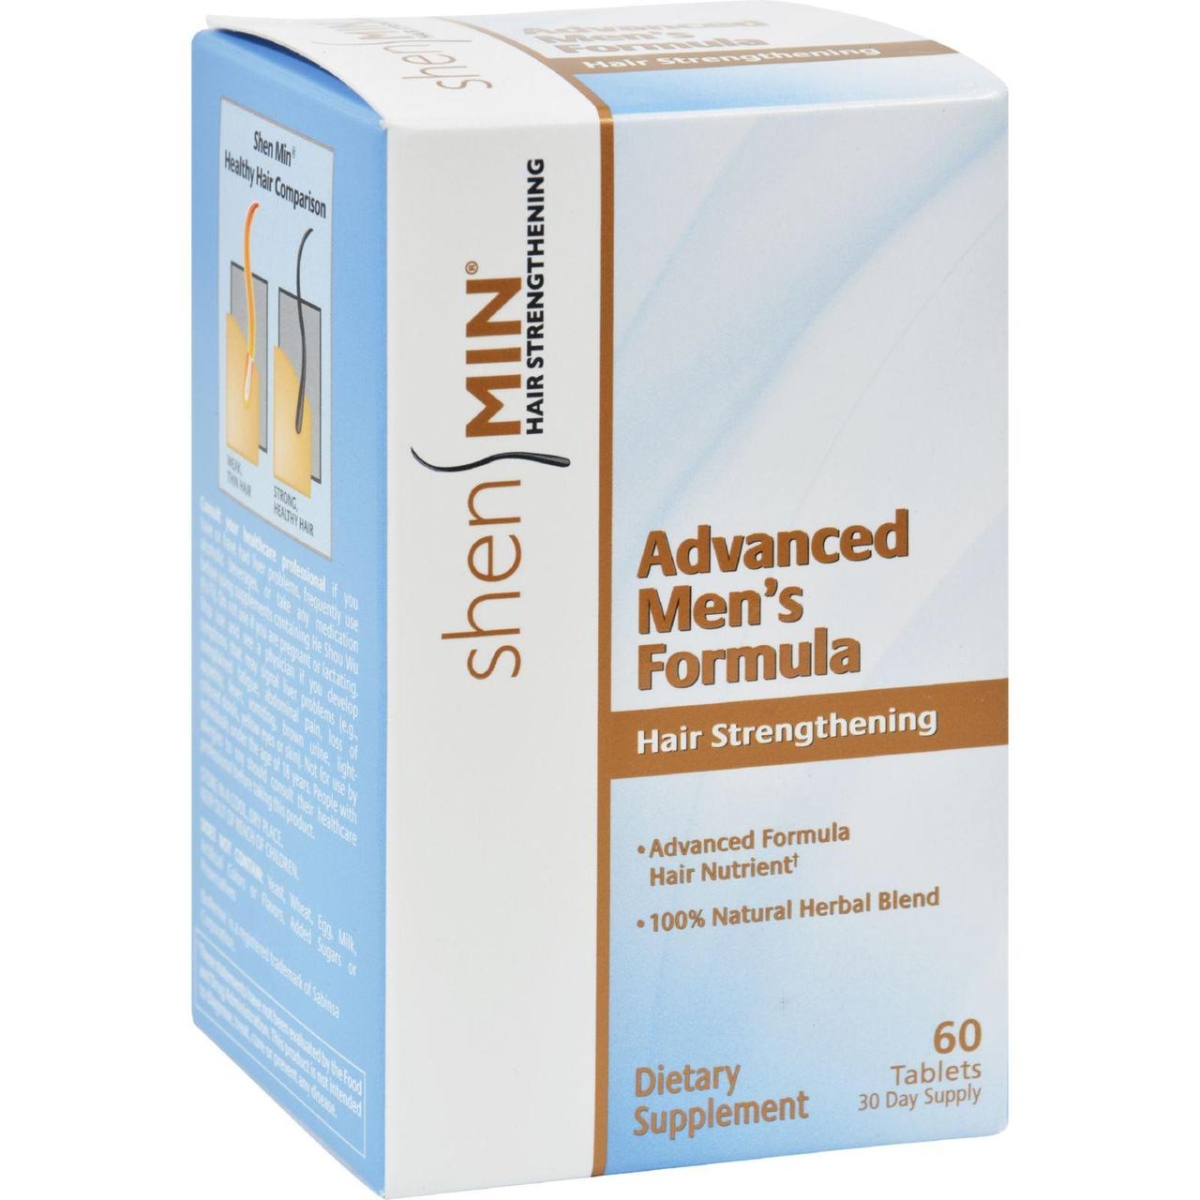 Hg0908210 Hair Nutrient Advanced Mens Formula - 60 Tablets